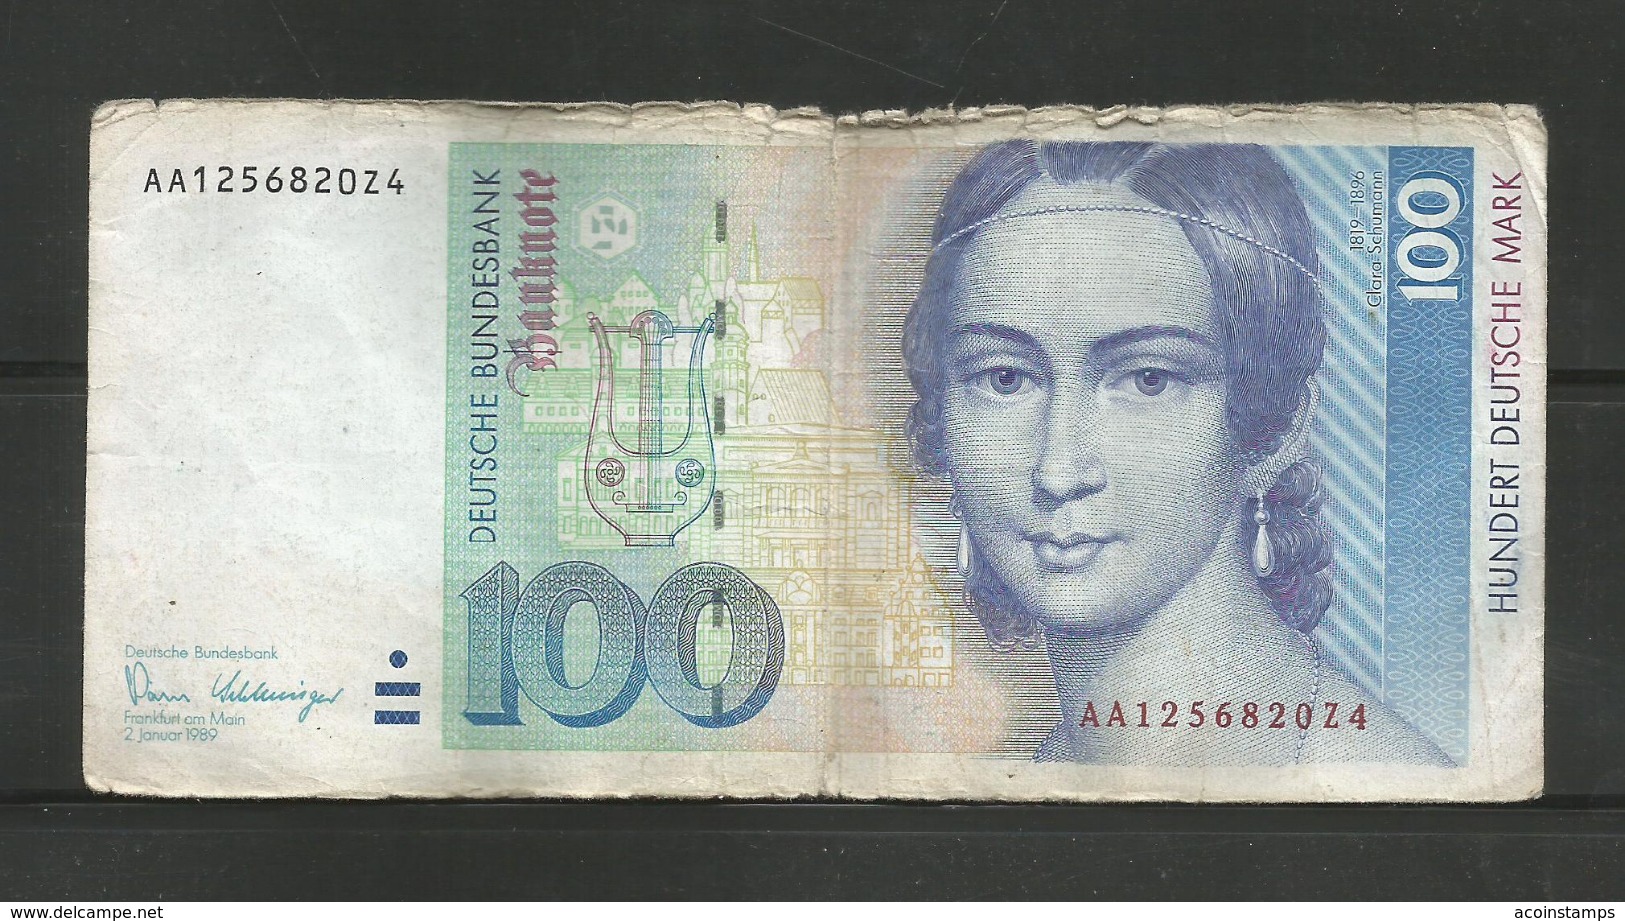 GERMANY 100 MARK 1989 FRANKFURT BANKNOTE DEUTSCHE BUNDESBANK HUNDERT DEUTSCHE MARK - 100 Deutsche Mark